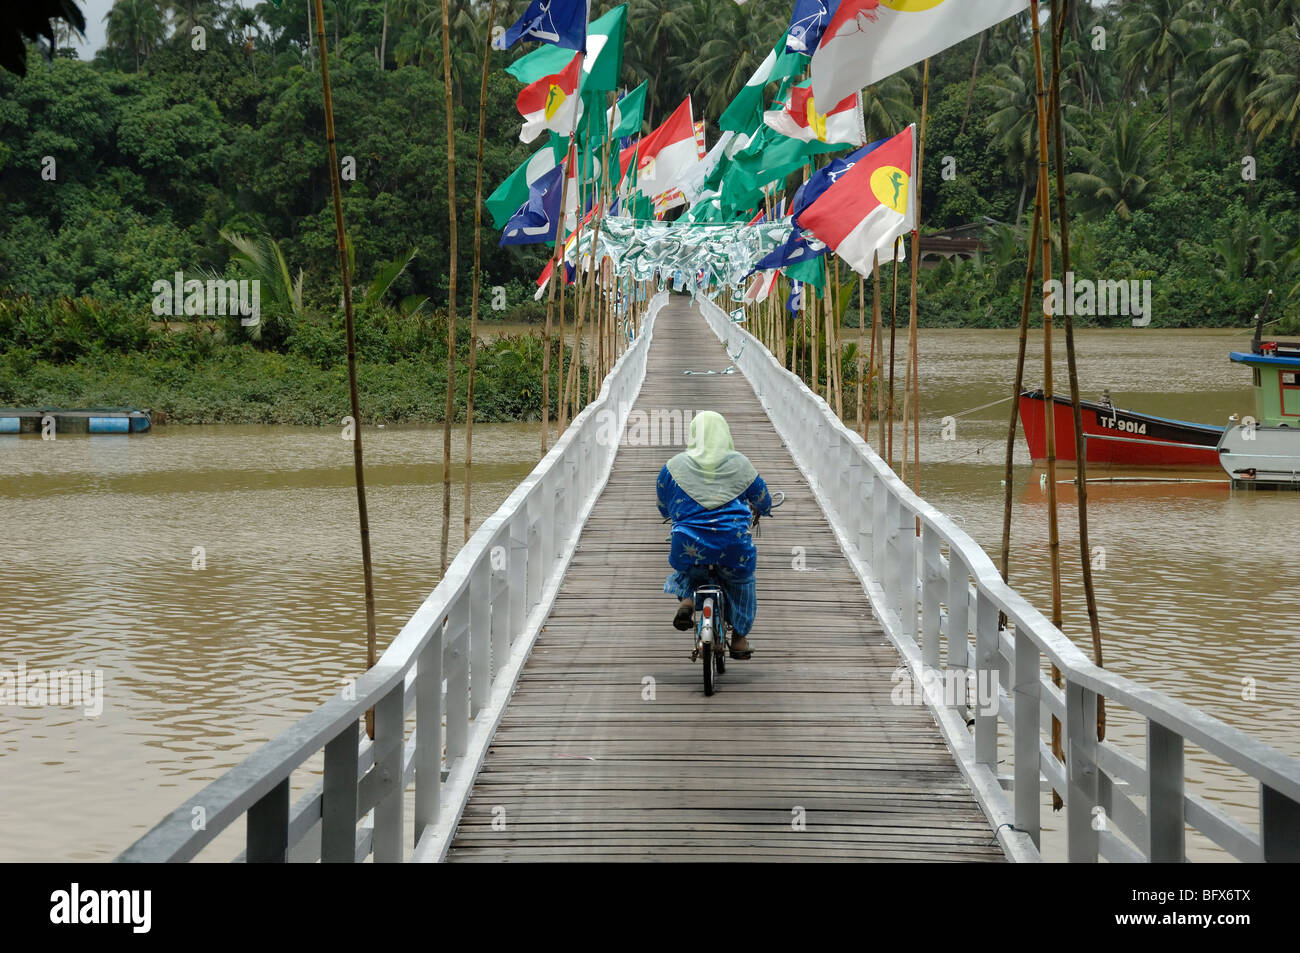 Malay or Malaysian Muslim Woman Cycling Across Wooden Foot Bridge Covered in Election Flags, Kuala Terengganu, Malaysia Stock Photo